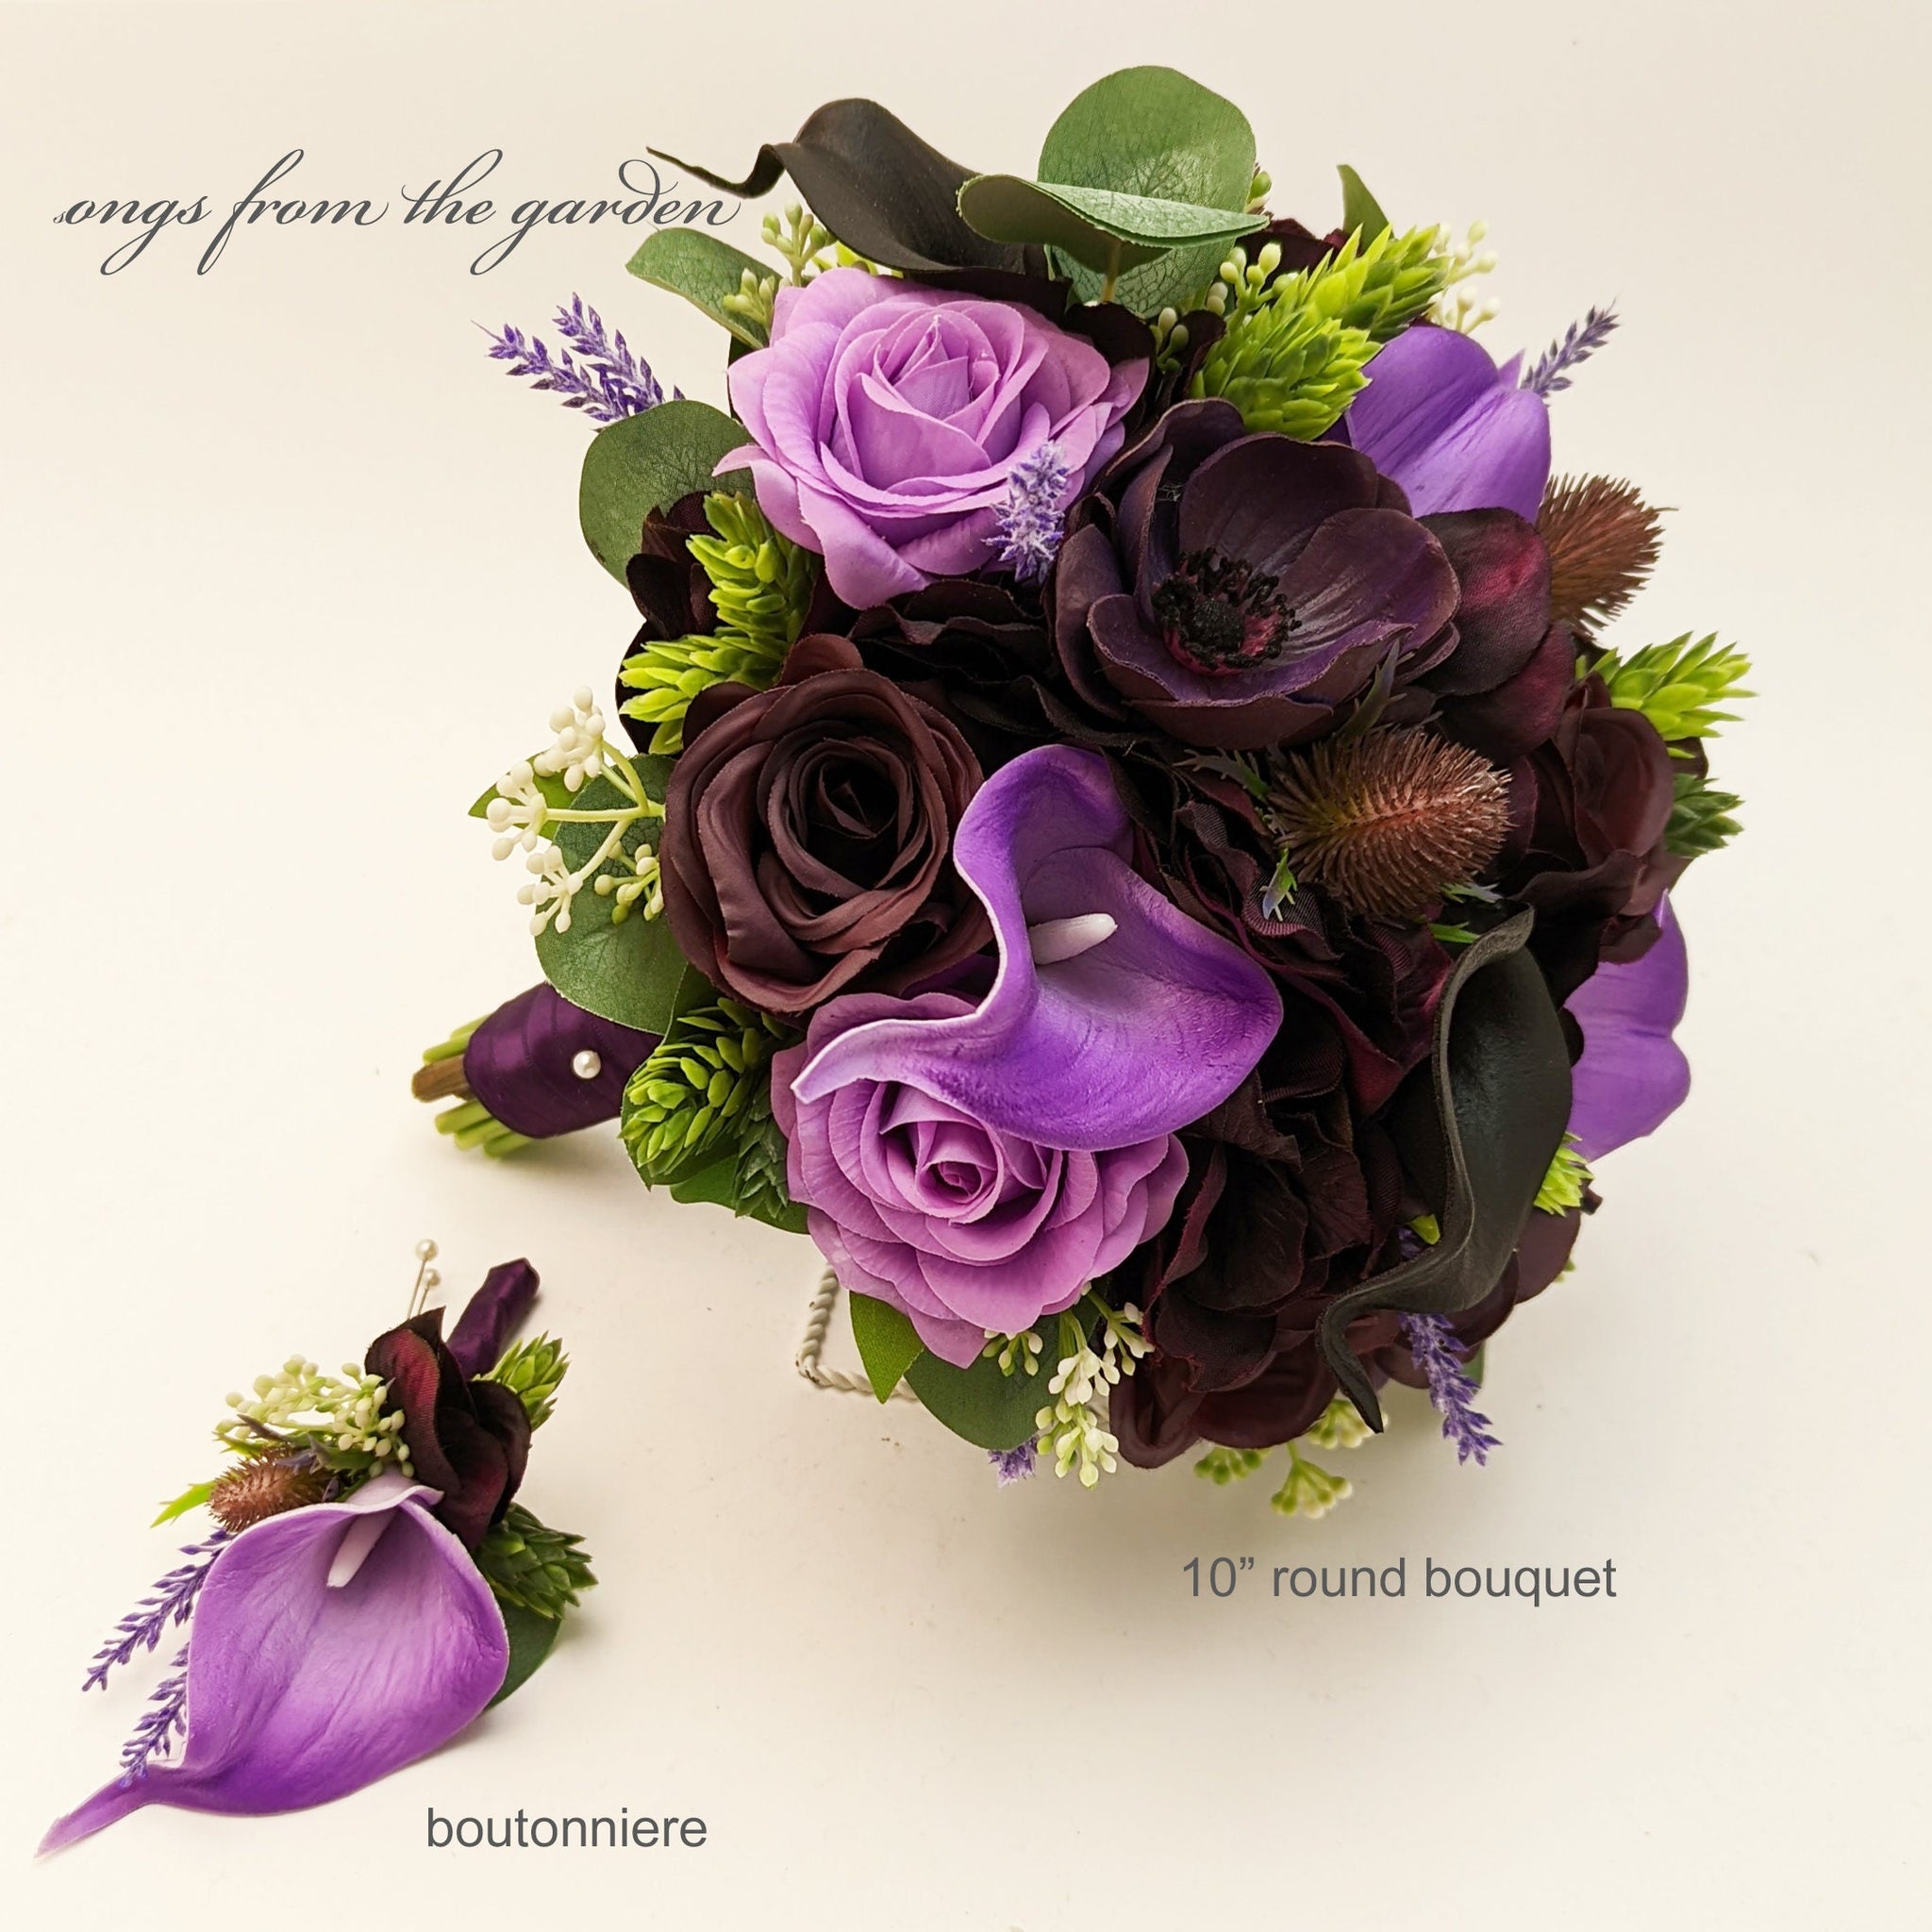 Cascade Bridal Bouquet Black Plum Purple Anemones Roses Callas Eucalyptus - Add Groom's Boutonniere or Matching Corsage Centerpieces & More!